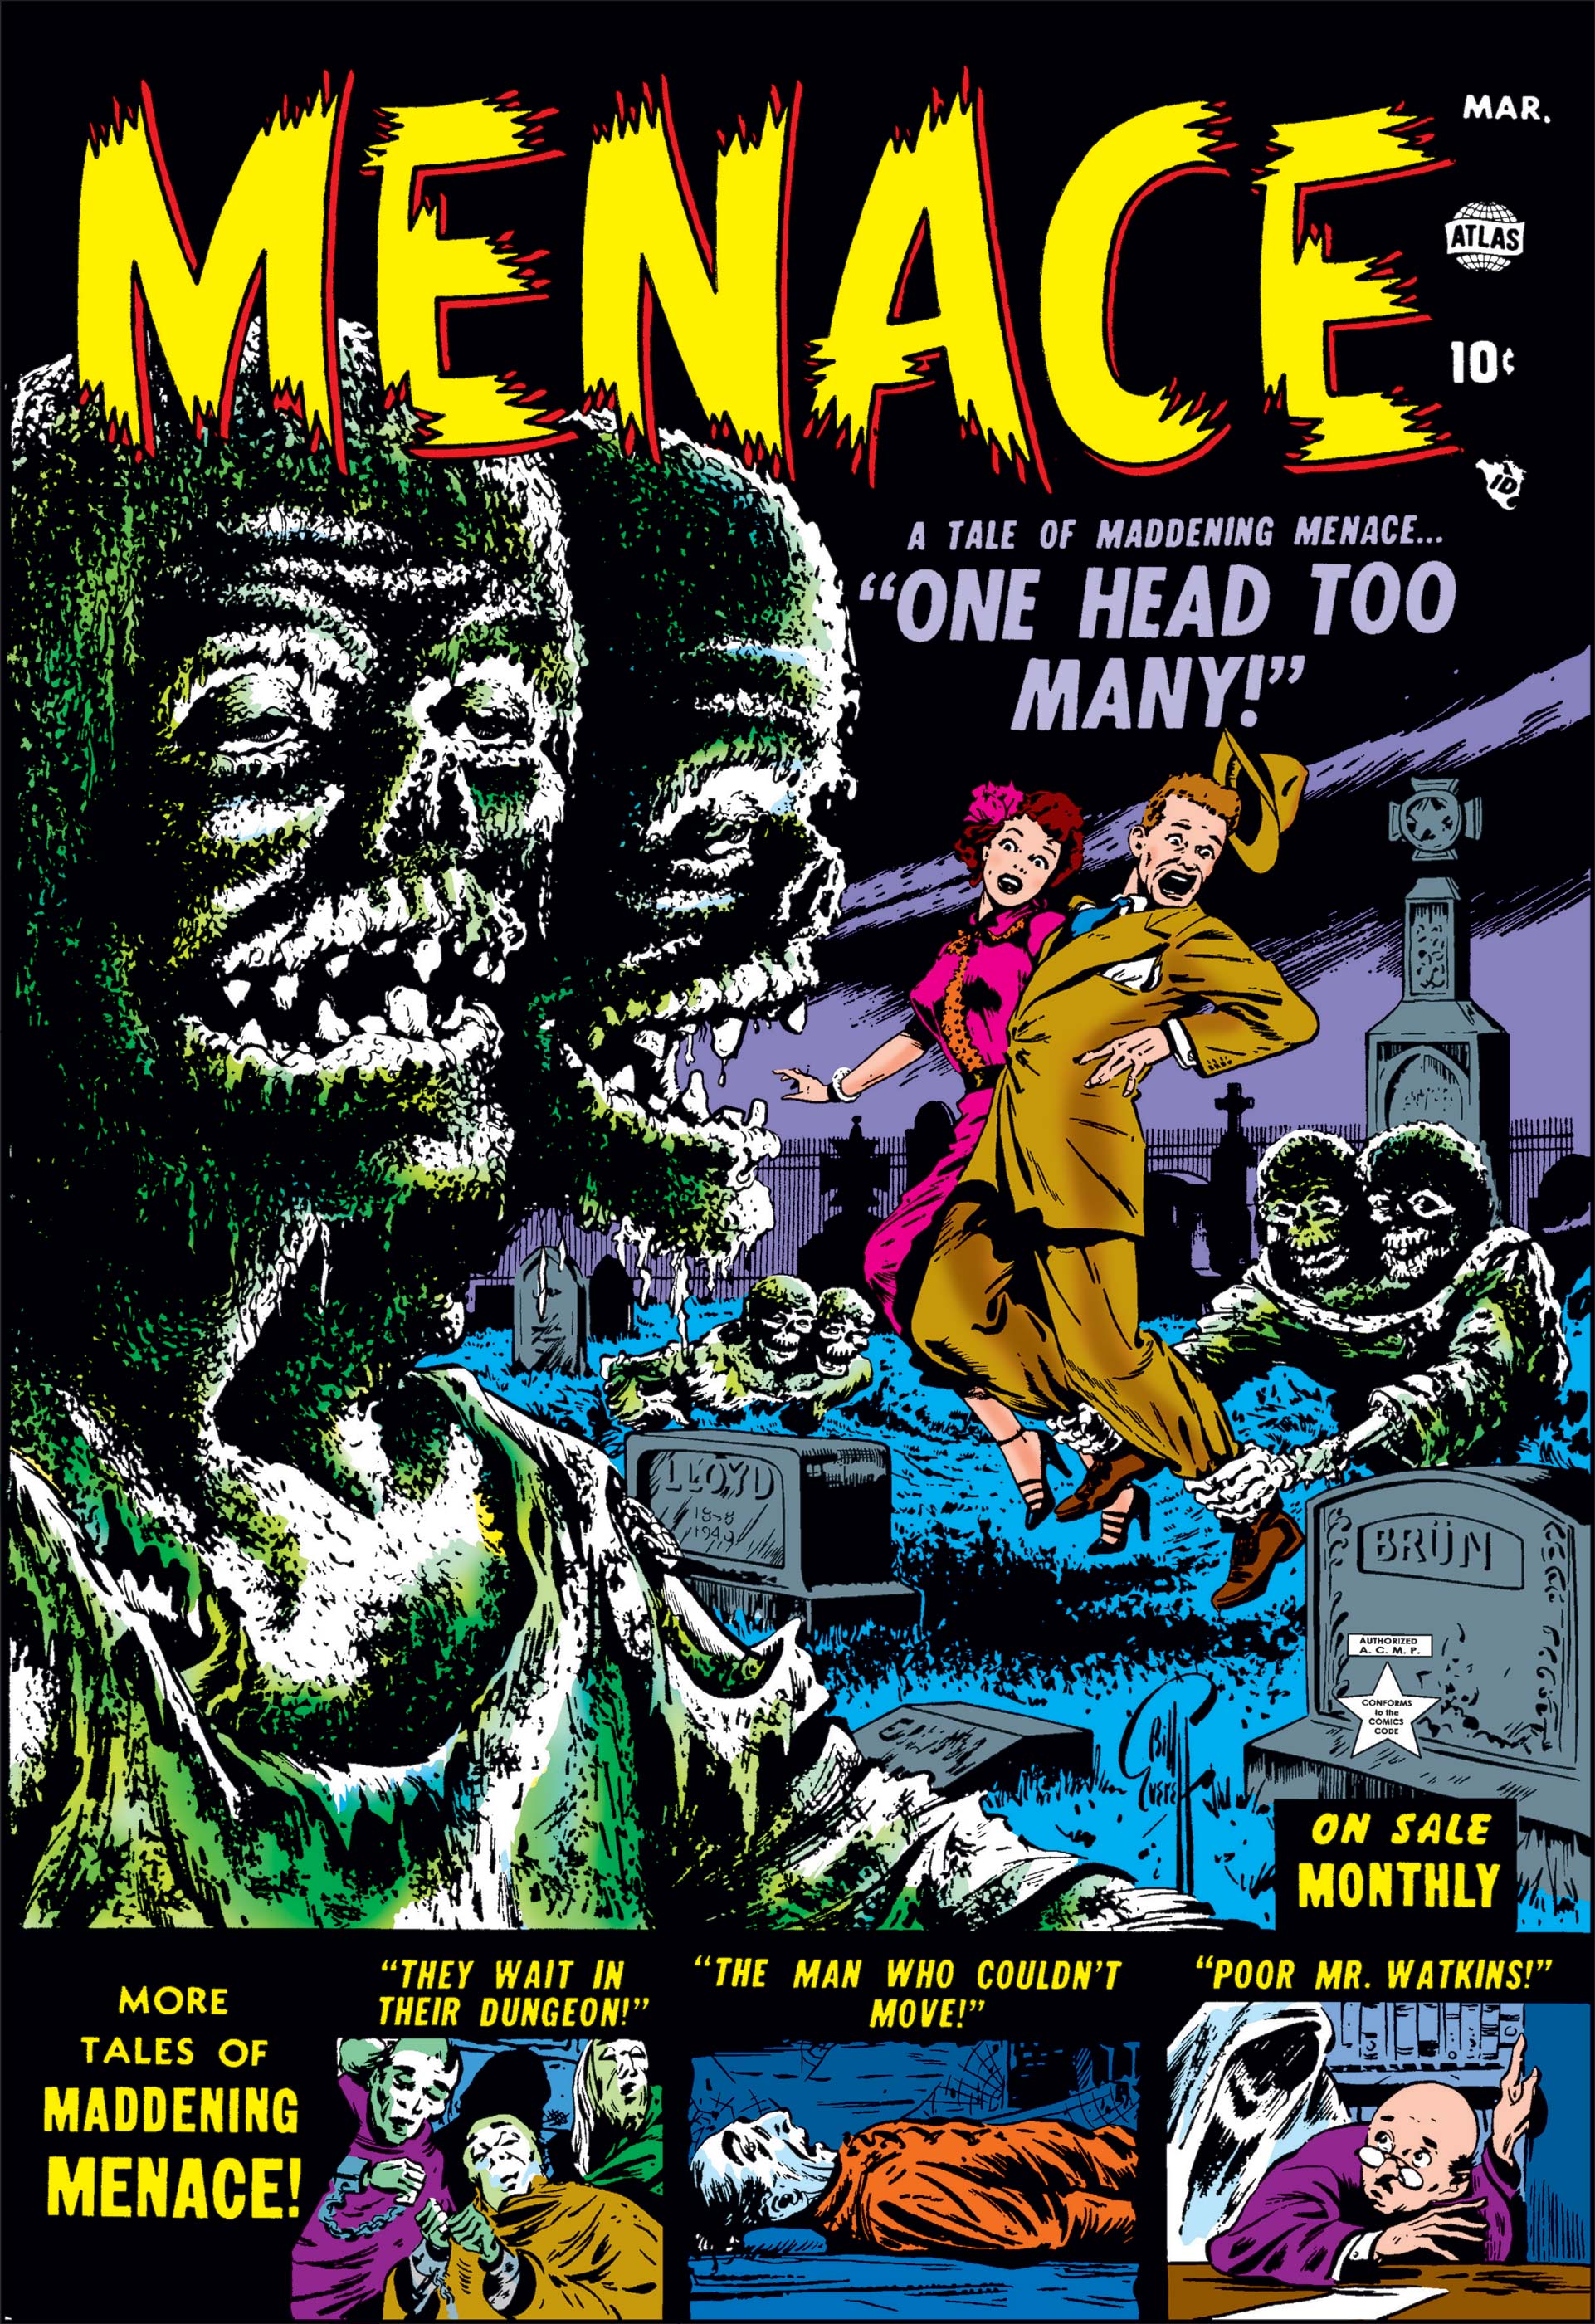 Menace (1953) #1